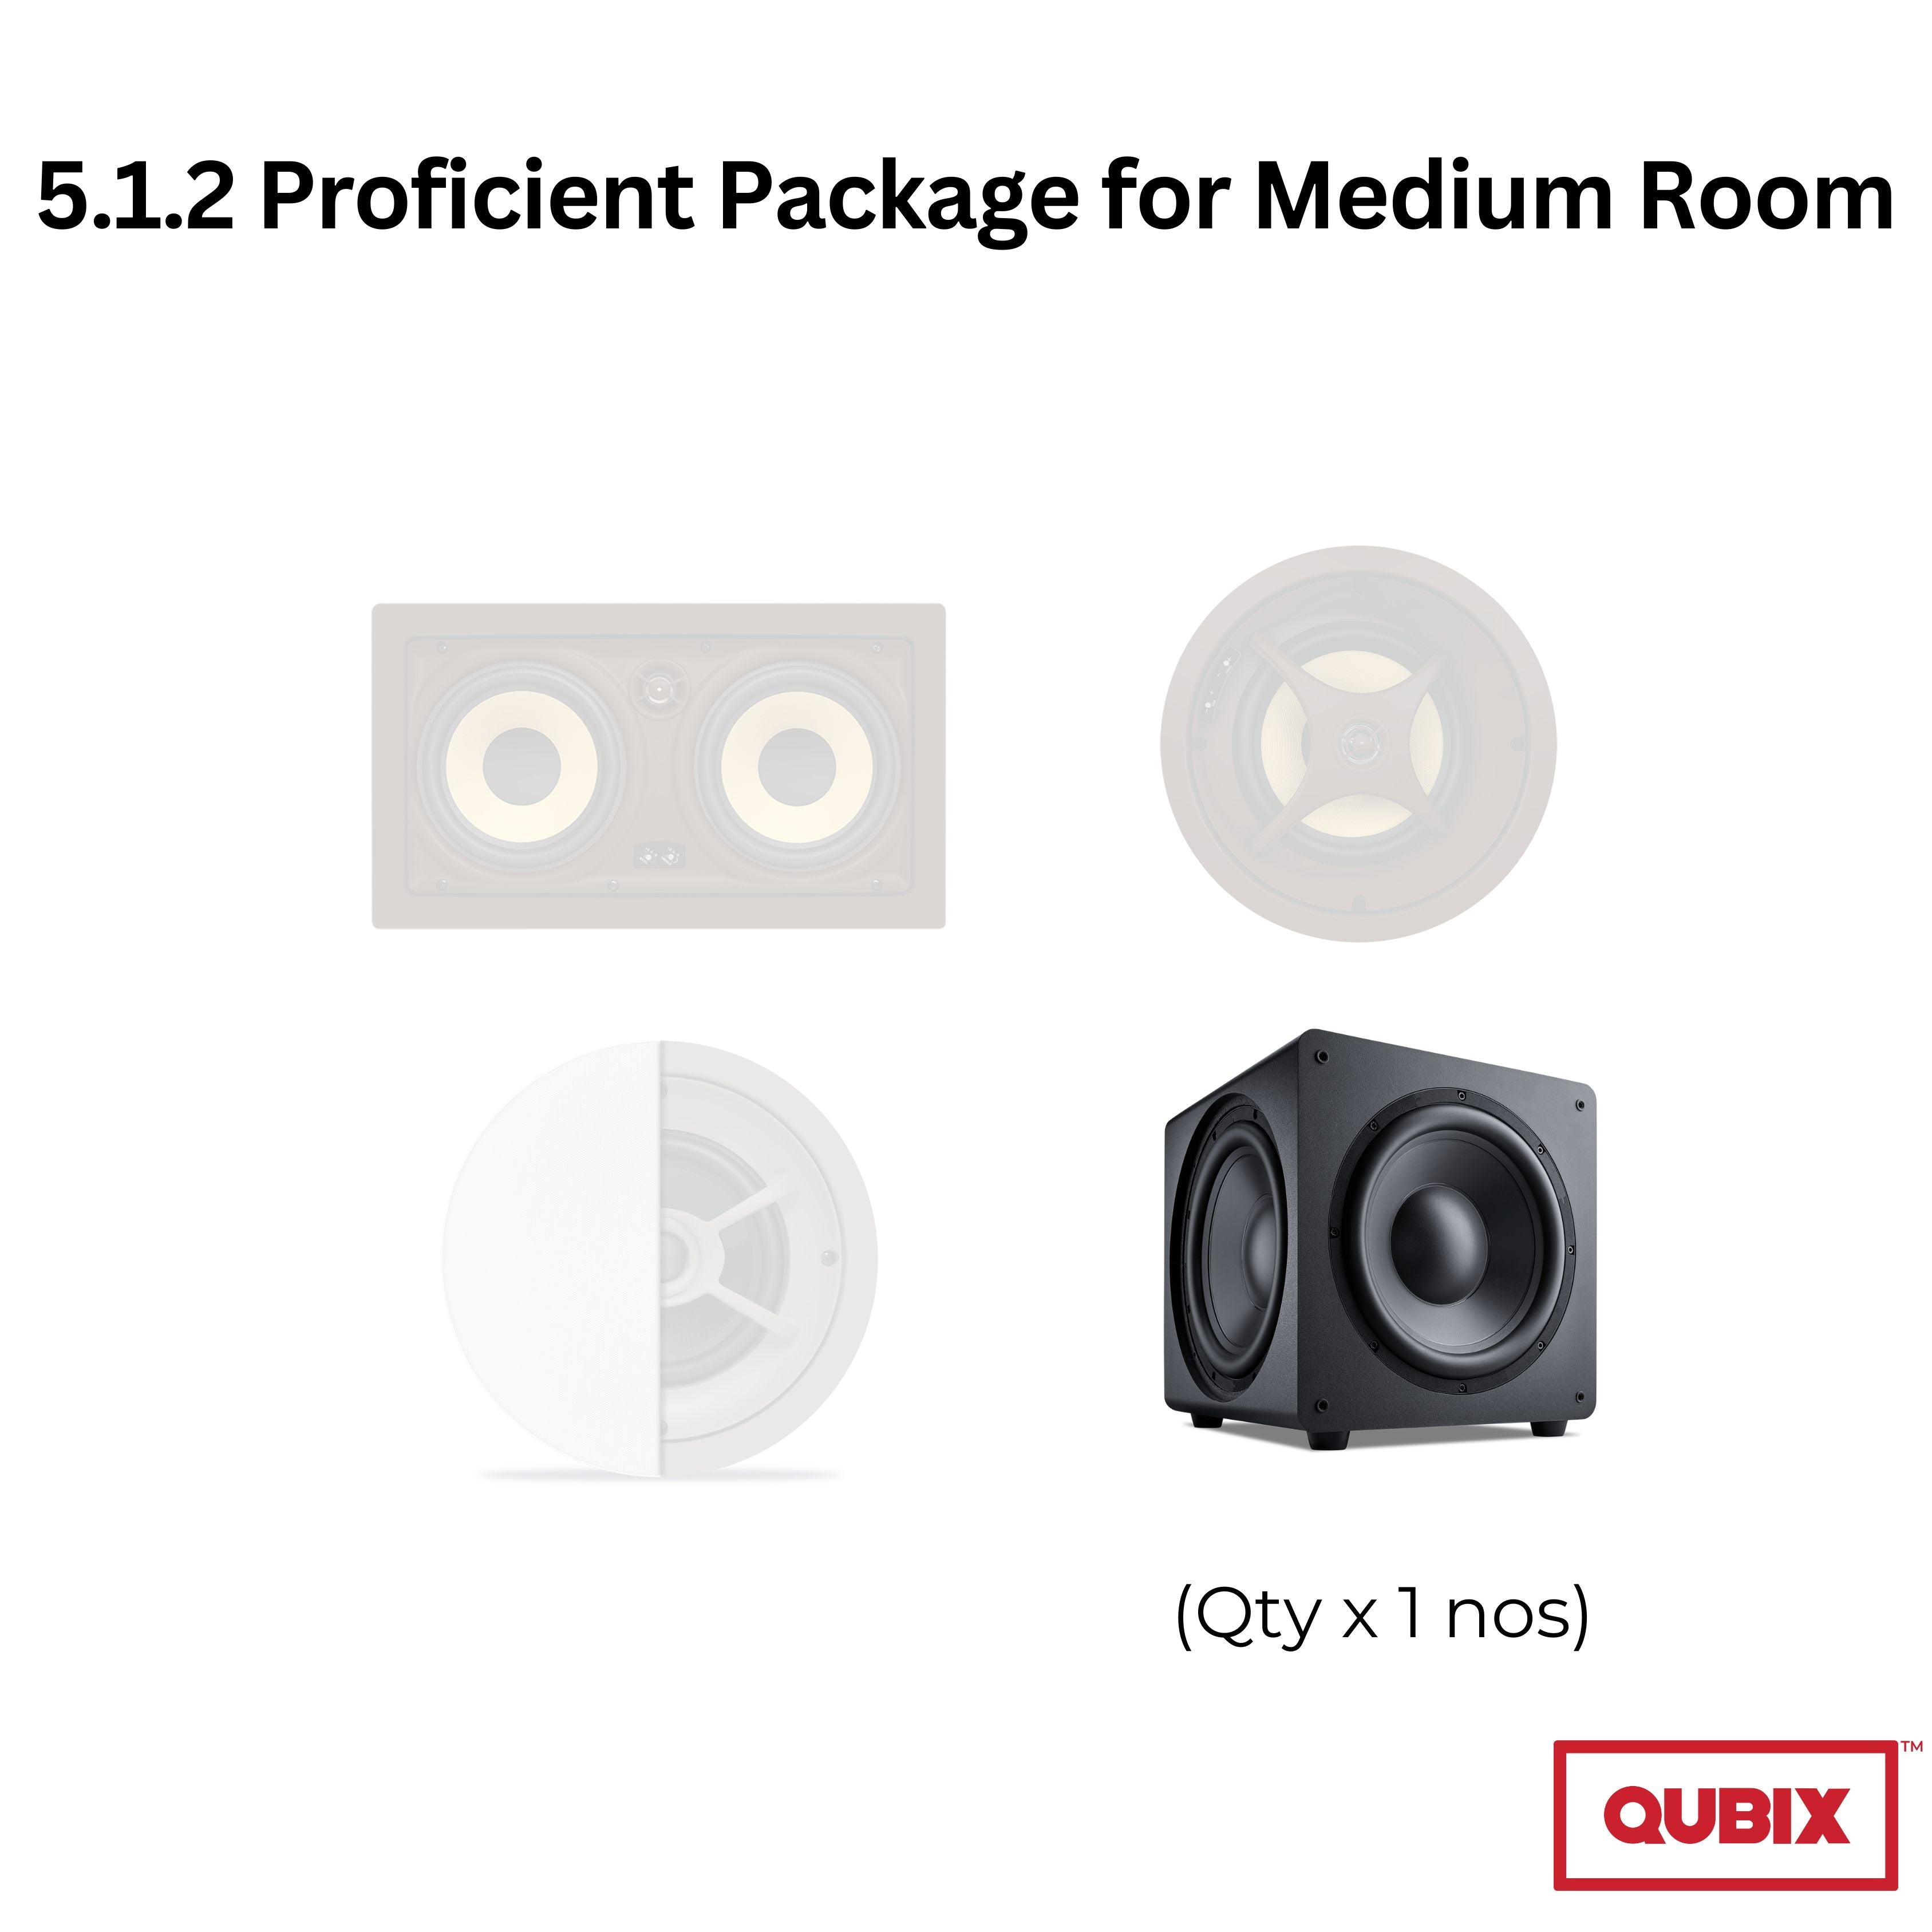 5.1.2 Proficient Package for Medium Room